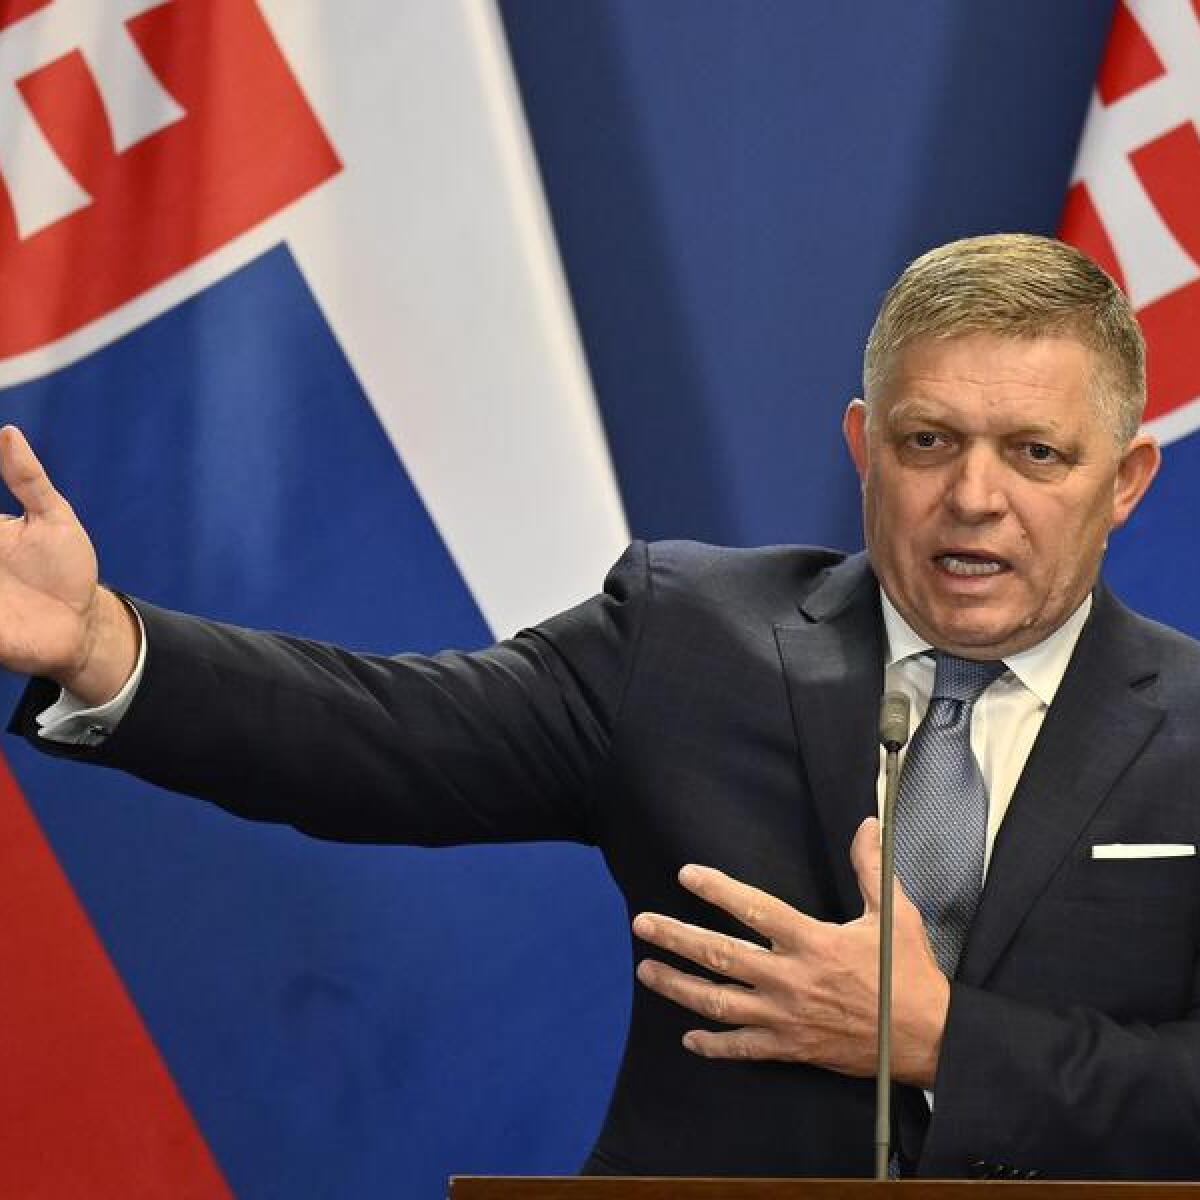 Slovakia's Prime Minister Robert Fico